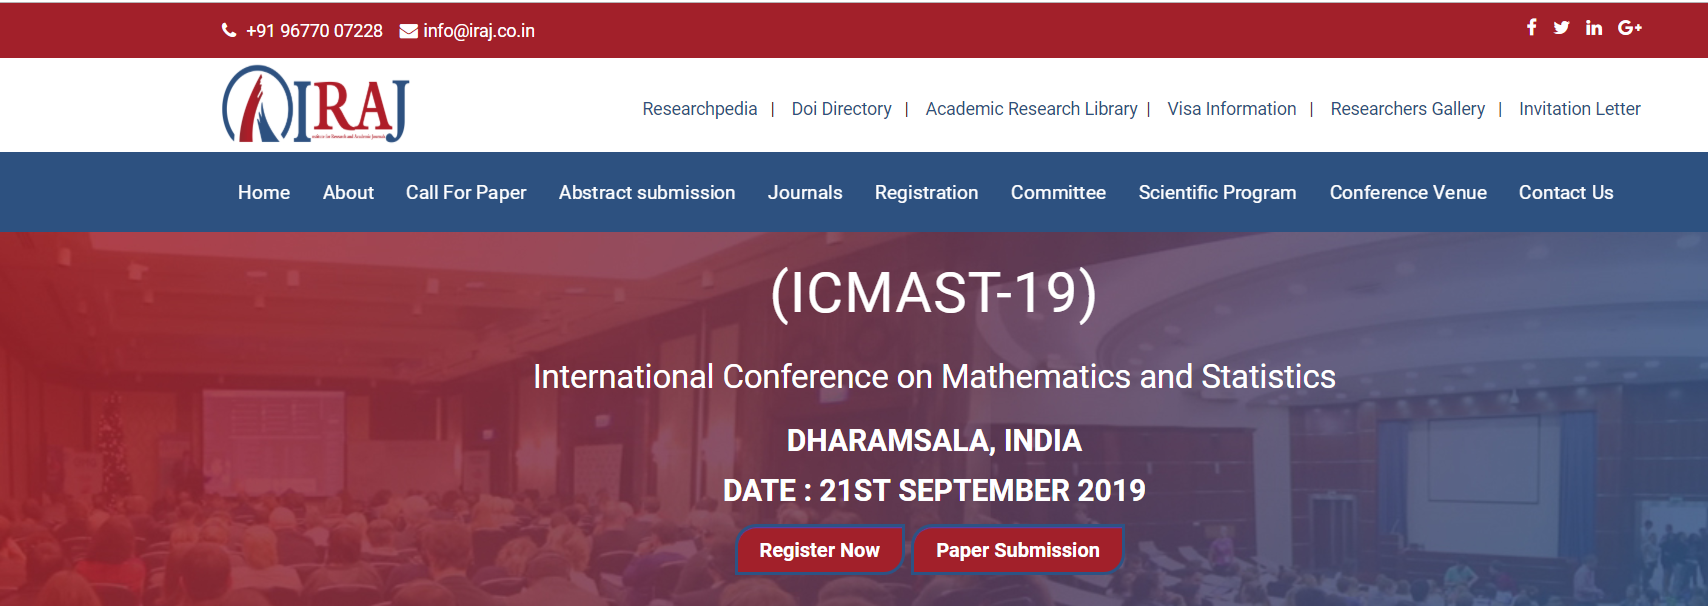 International Conference on Mathematics and Statistics (ICMAST-19), DHARAMSALA, INDIA,Himachal Pradesh,India